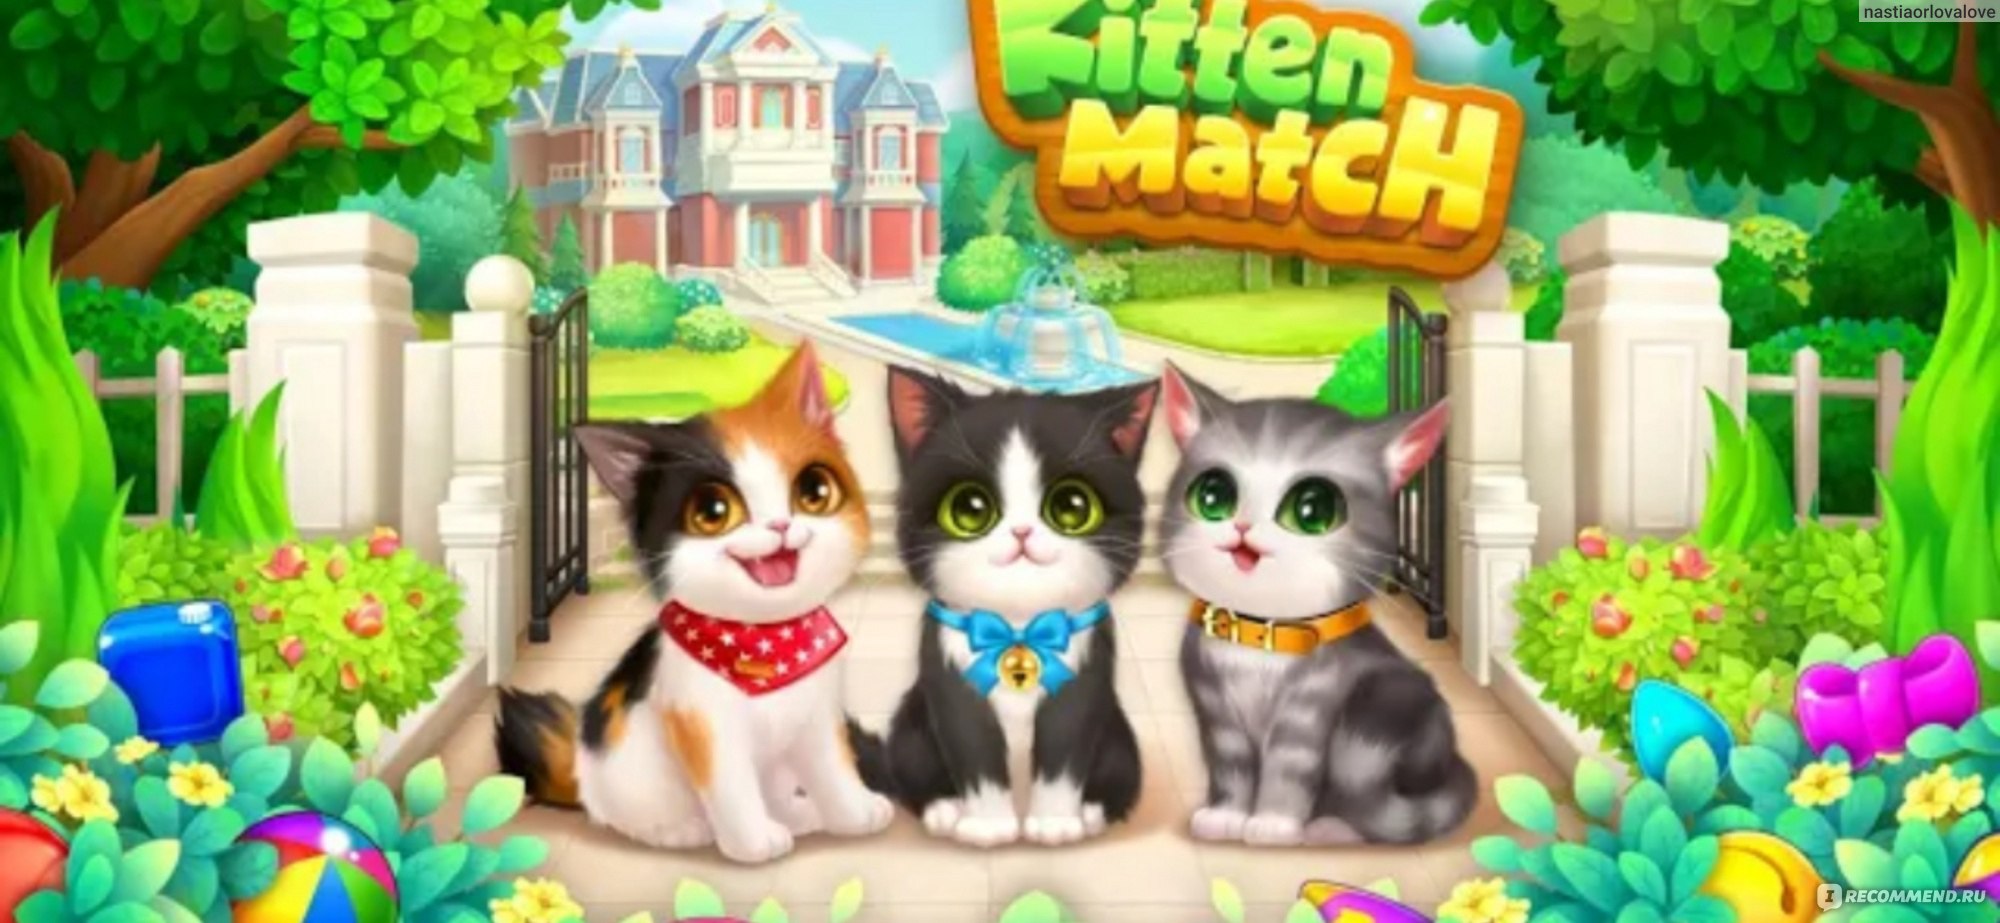 3 котенка играть. Kitten Match игра. Котята из игры Kitten Match. Киттен матч игра. Игра три в ряд с котиками.